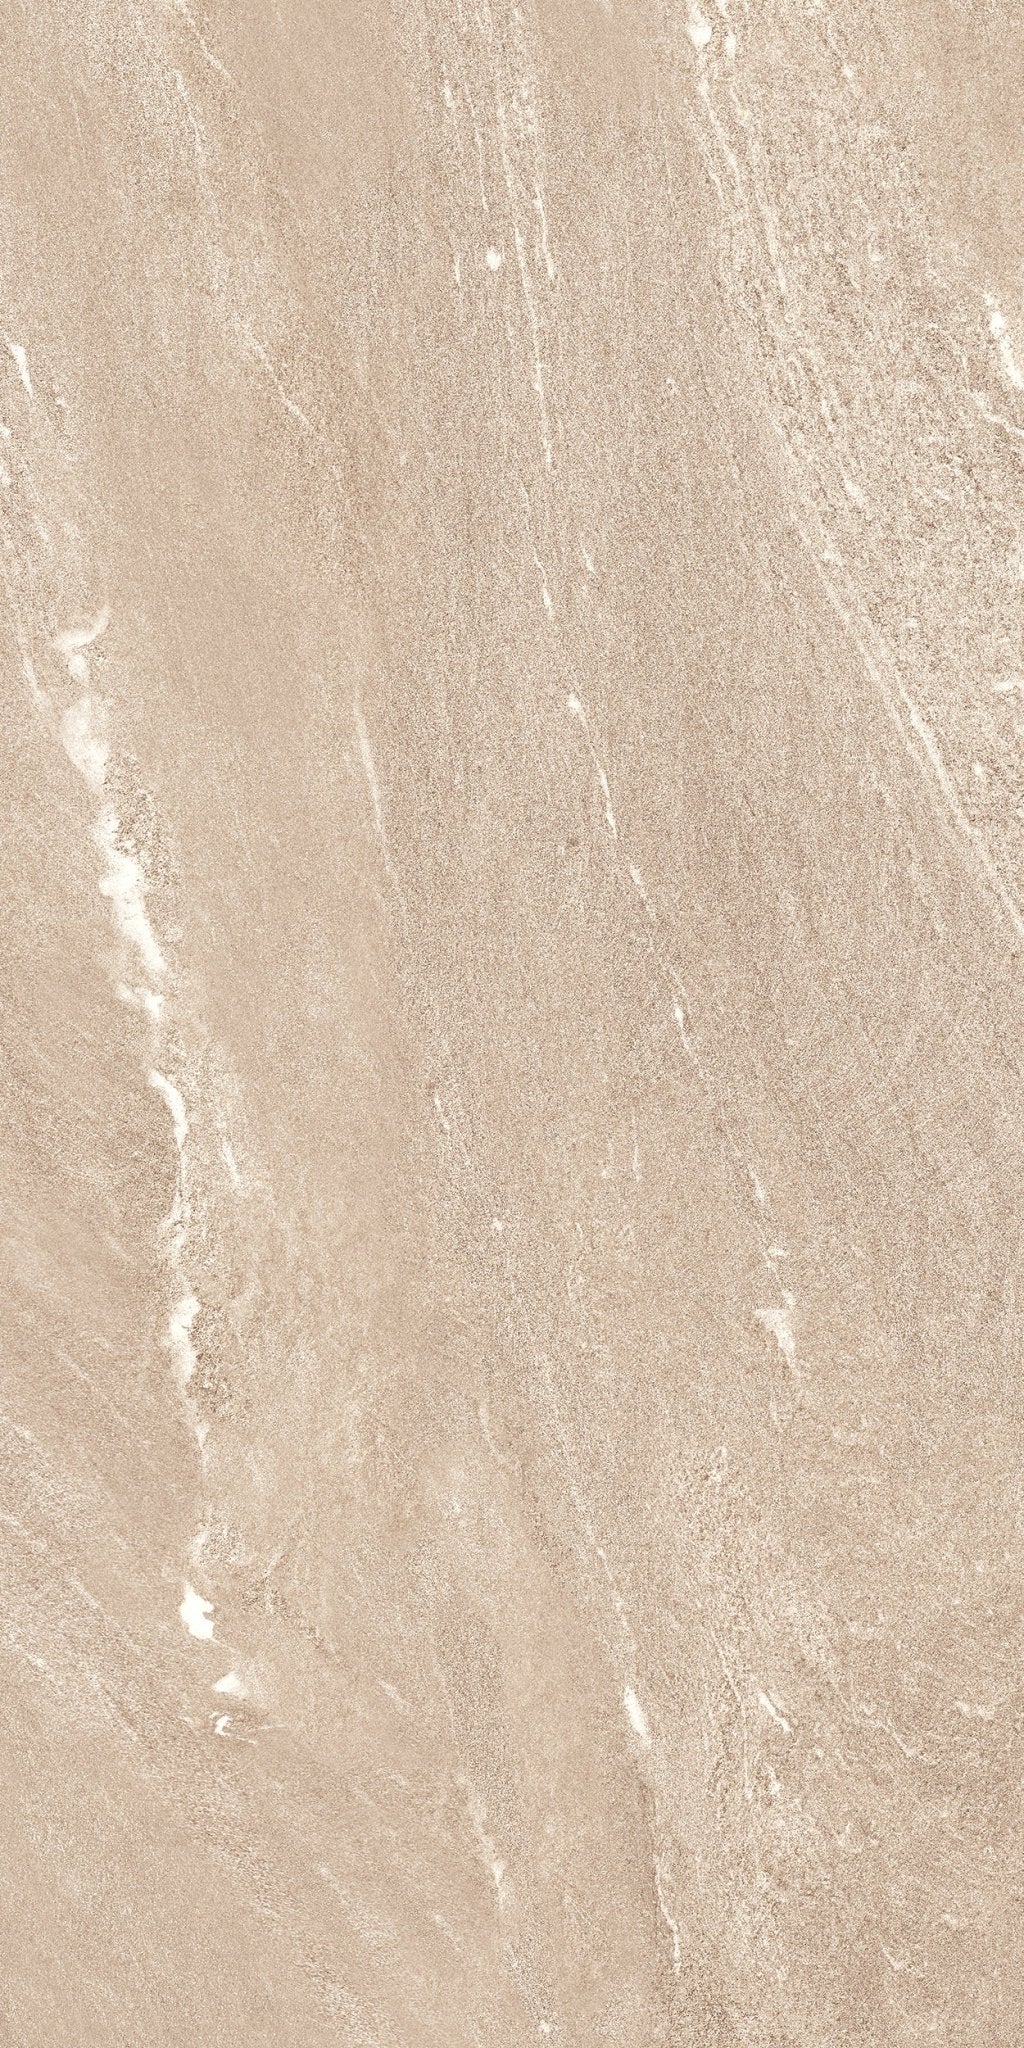 Piedra TecnológicaWaystone - Sand - Interni México